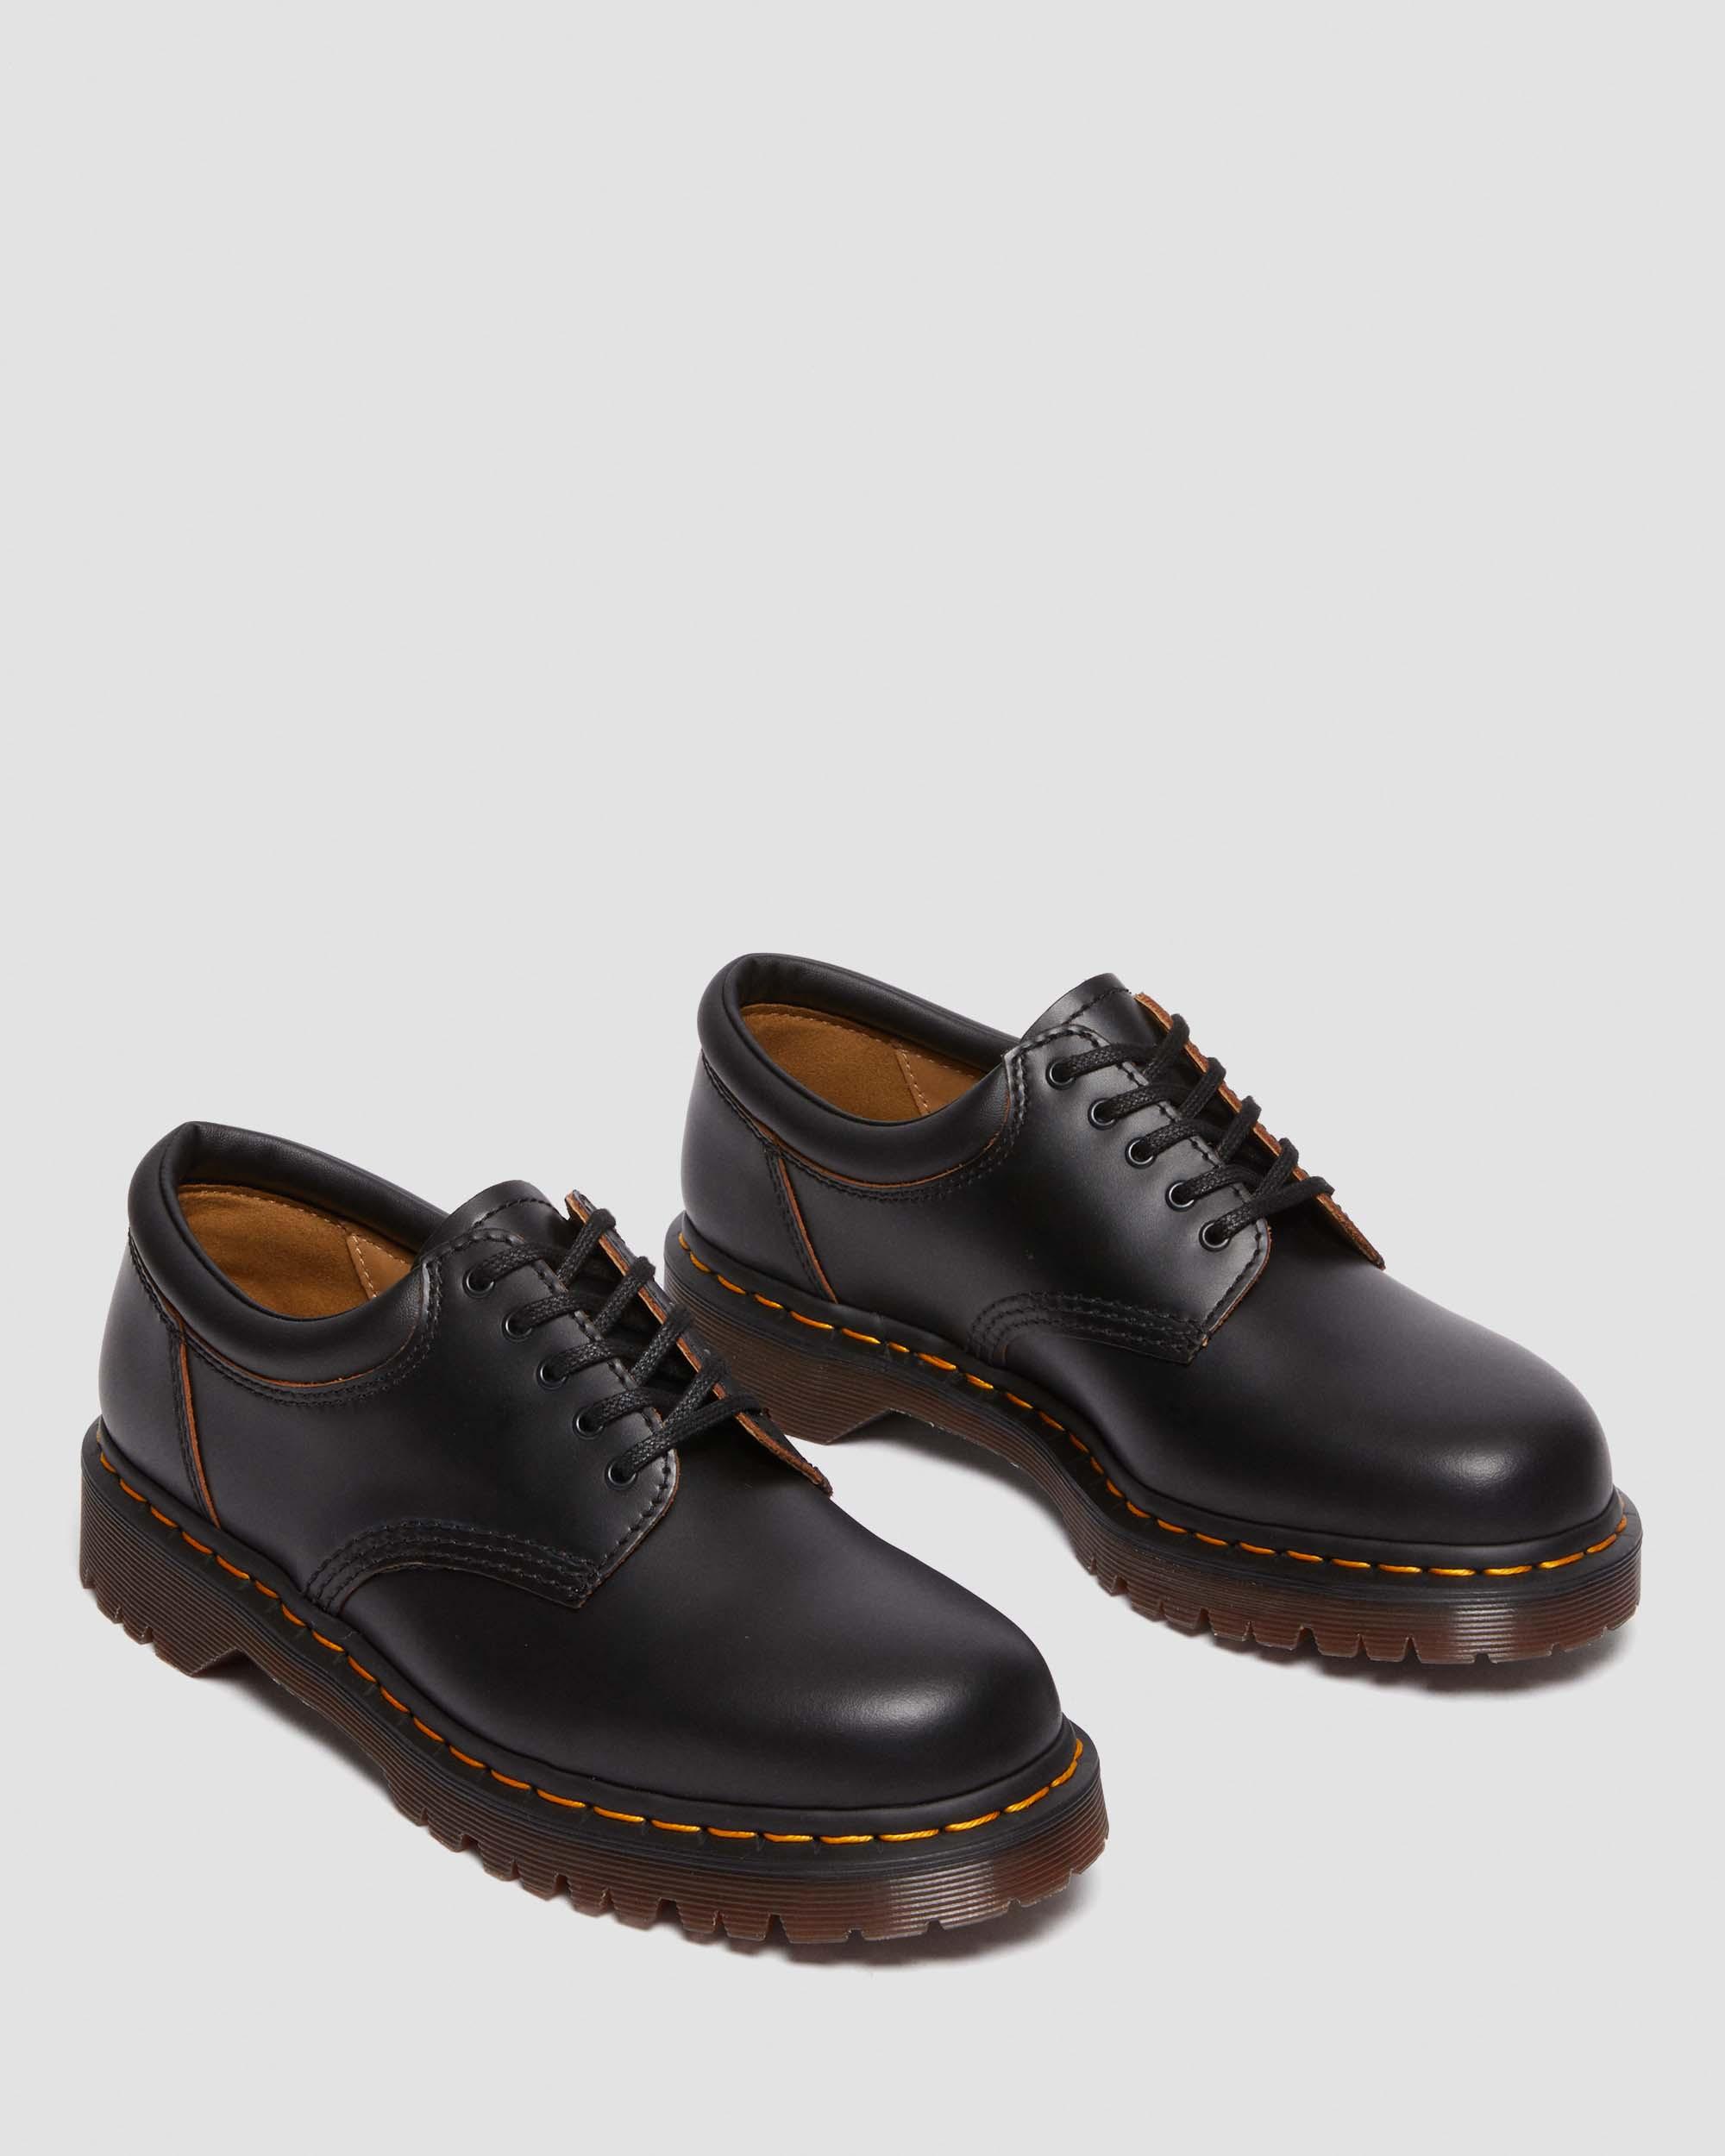 8053 Vintage Smooth Leather Oxford Shoes in Black | Dr. Martens